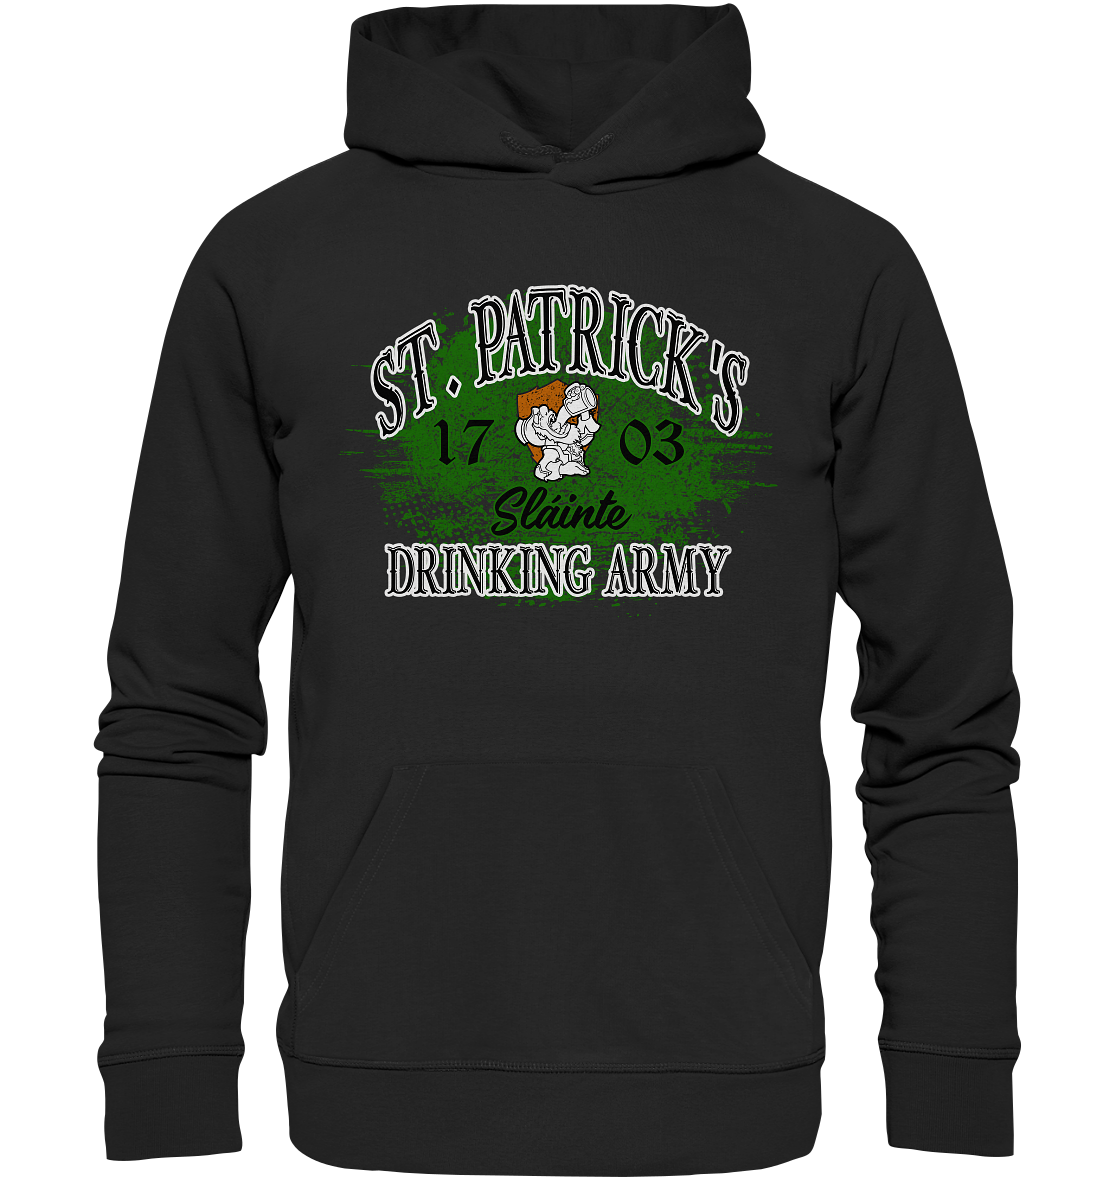 St. Patrick's Drinking Army "Sláinte" - Premium Unisex Hoodie